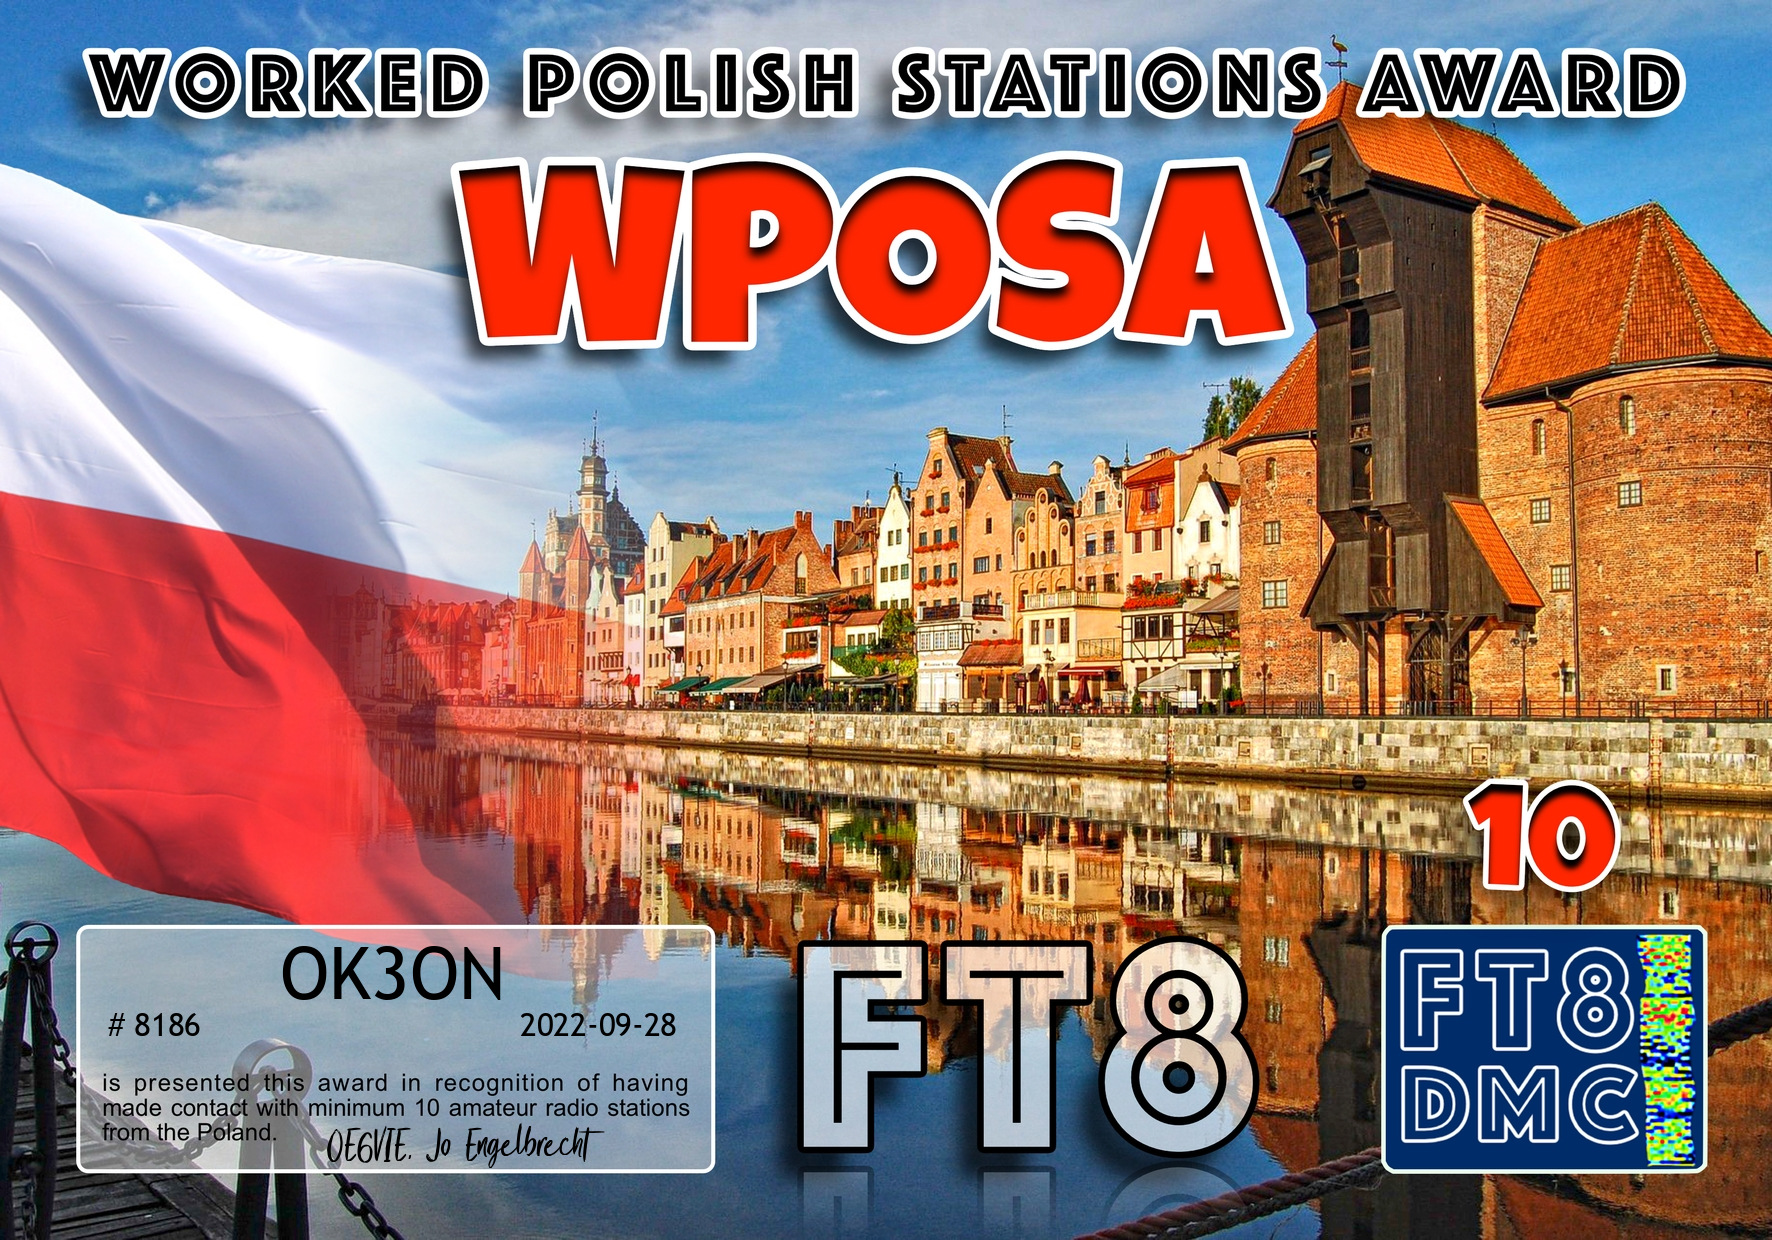 awards/OK3ON-WPOSA-III_FT8DMC.jpg